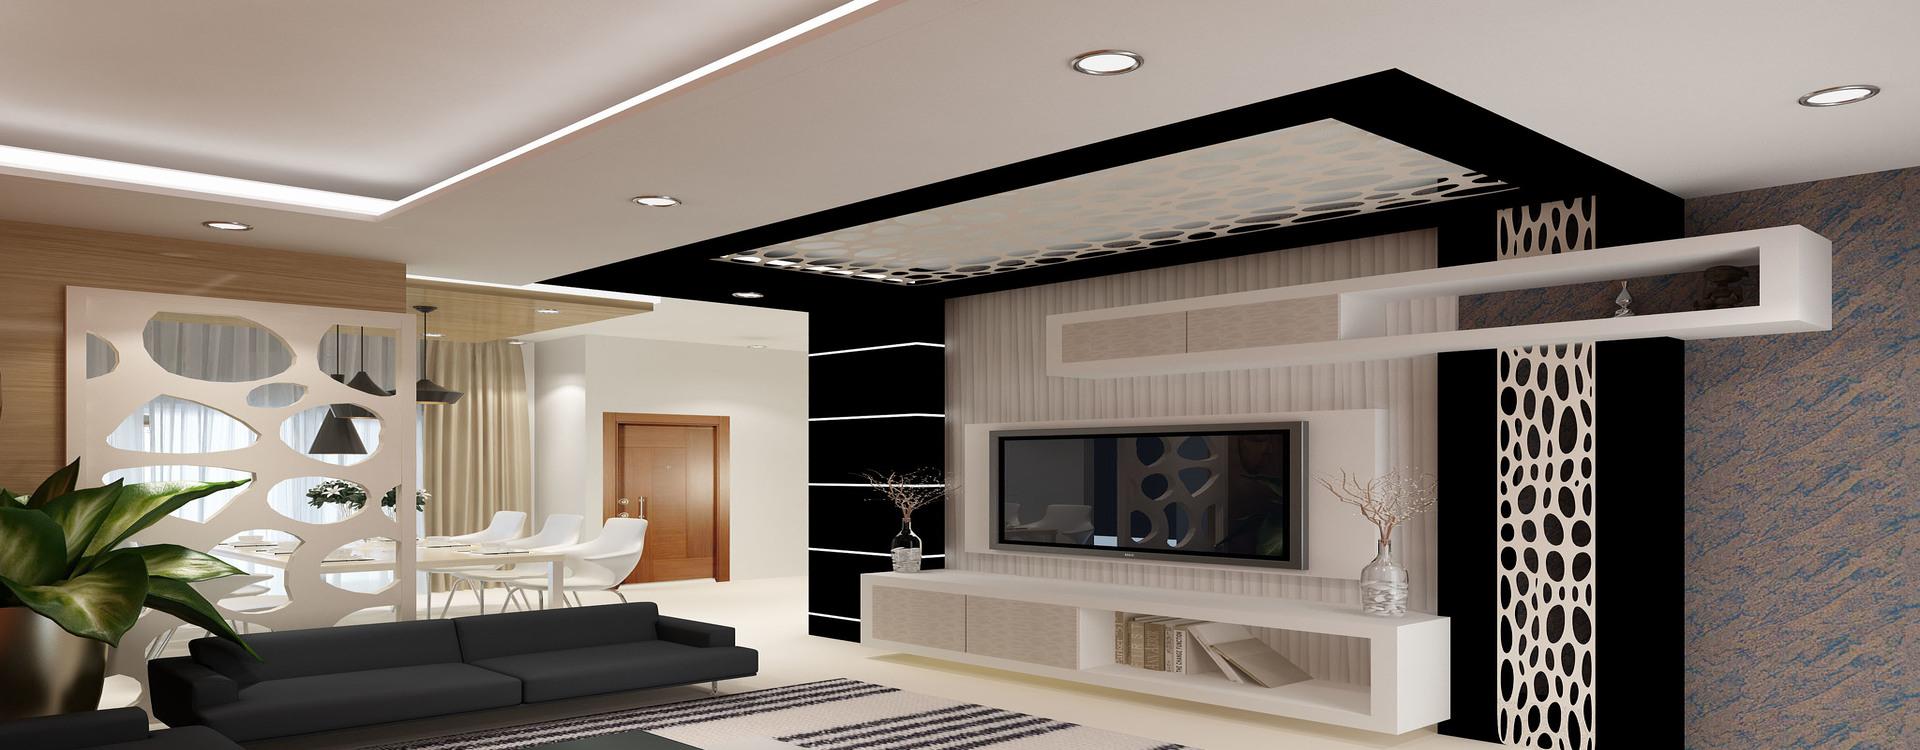 Luxury Farmhouse Living Room Interior Designs